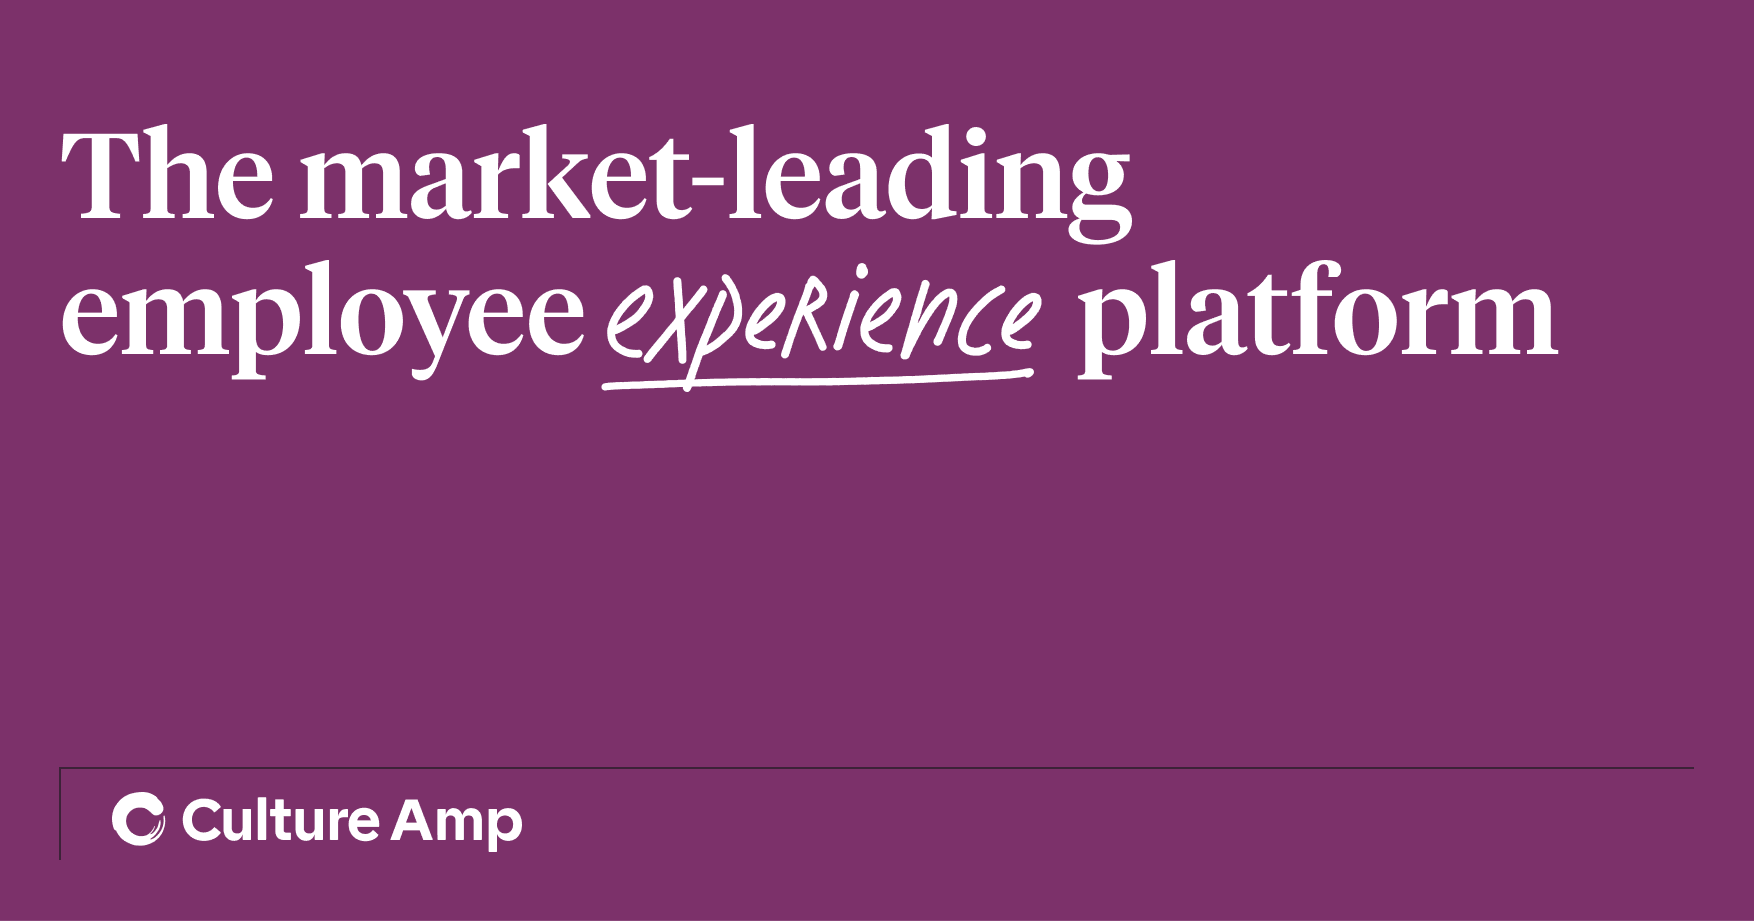 The market-leading employee experience platform